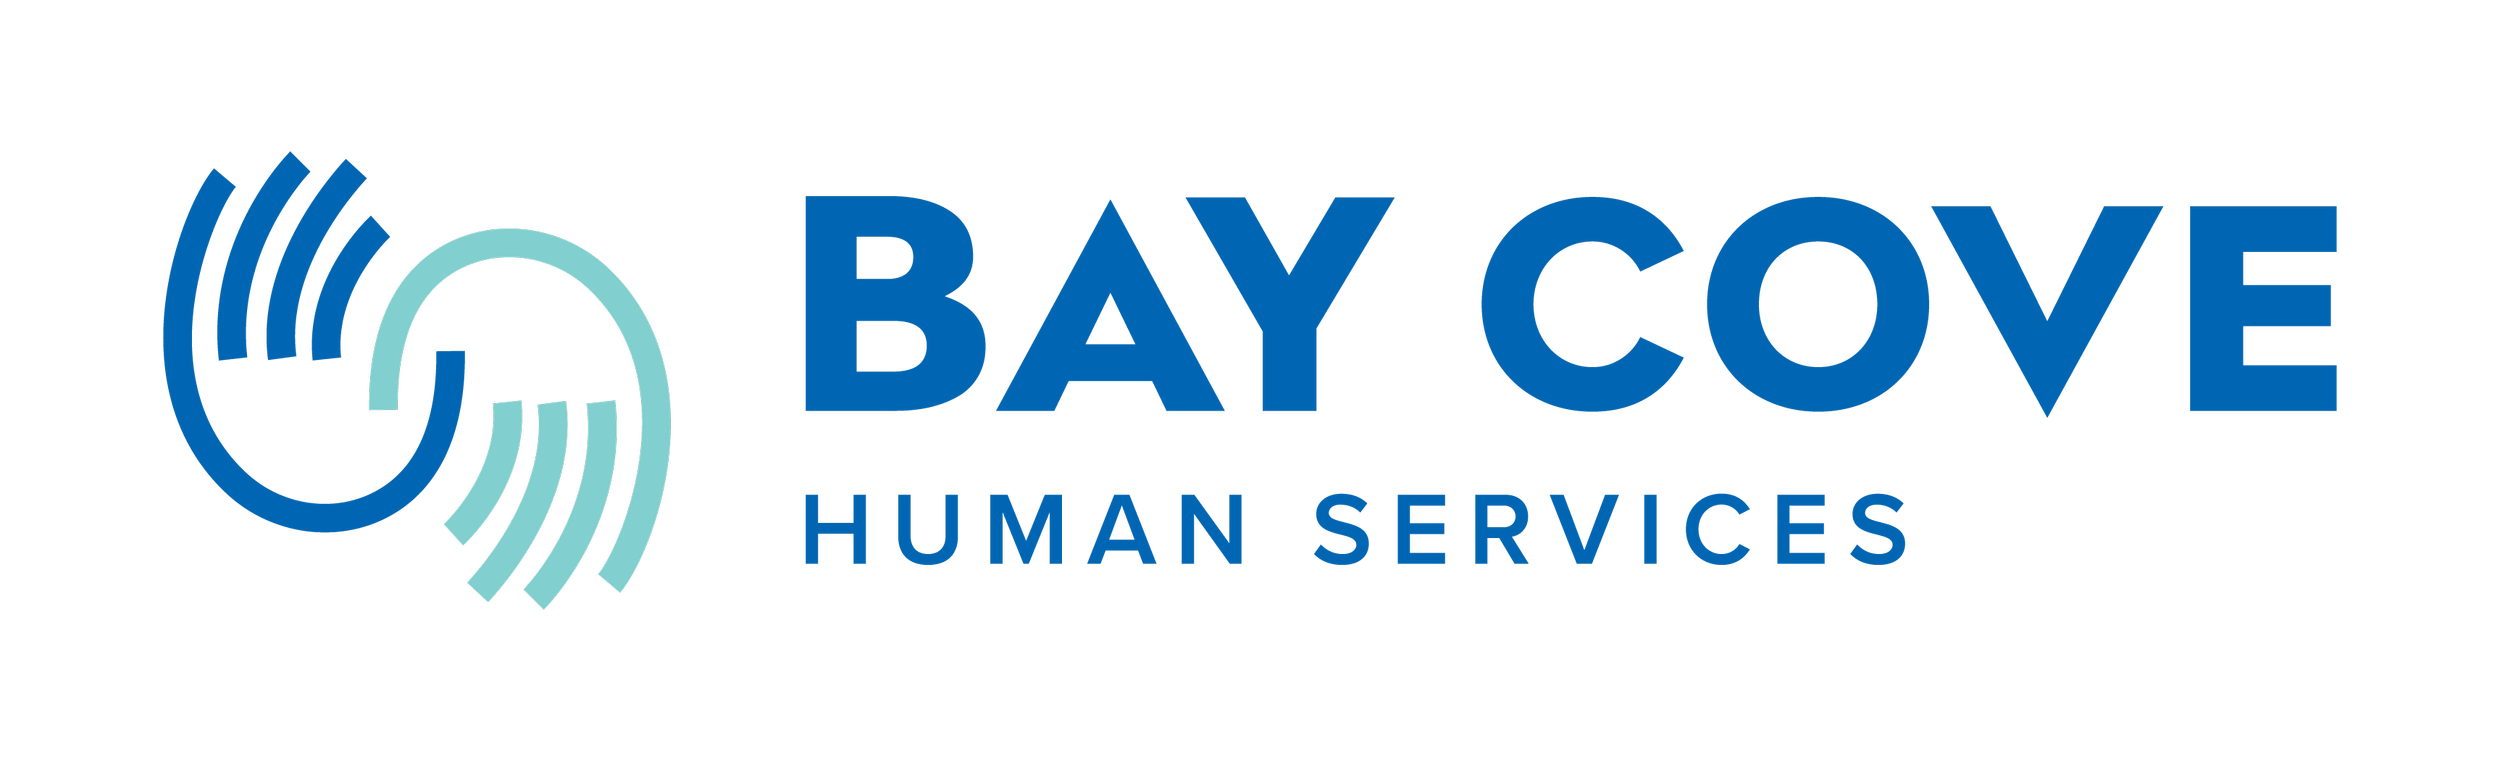 Servicios Humanos de Bay Cove